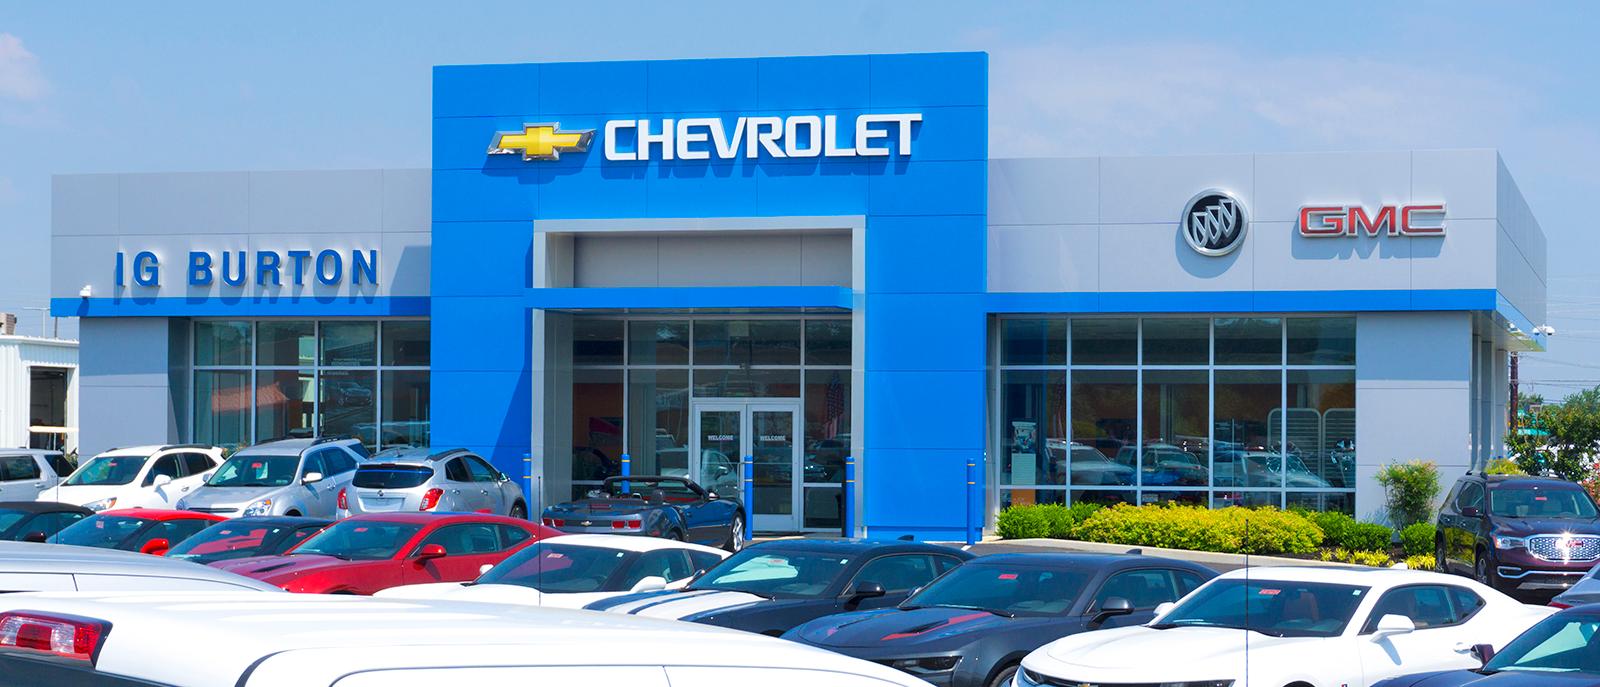 Chevrolet Dealership Exterior Image